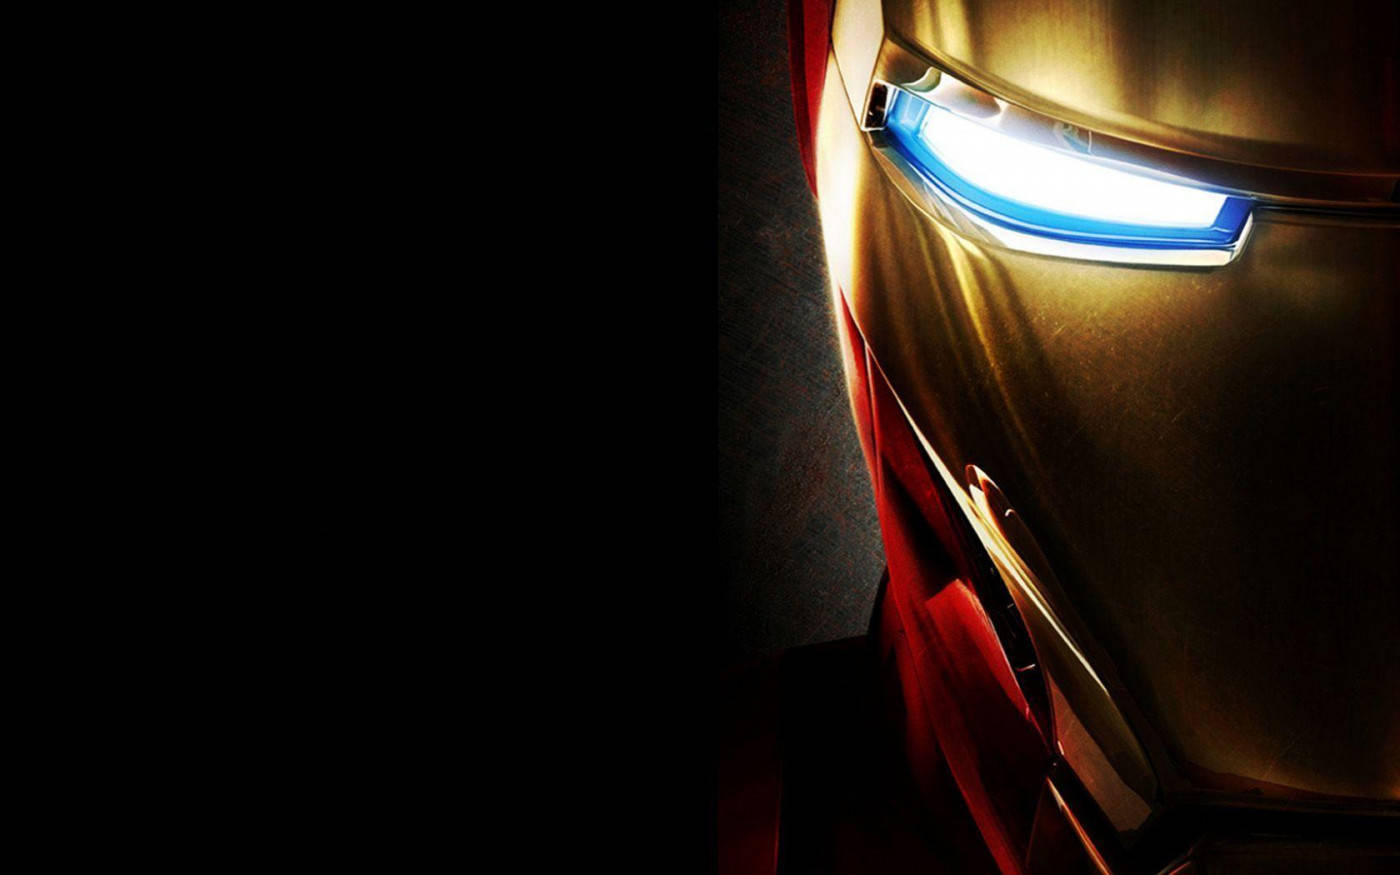 Hd Iron Man Iconic Helmet Closeup Wallpaper